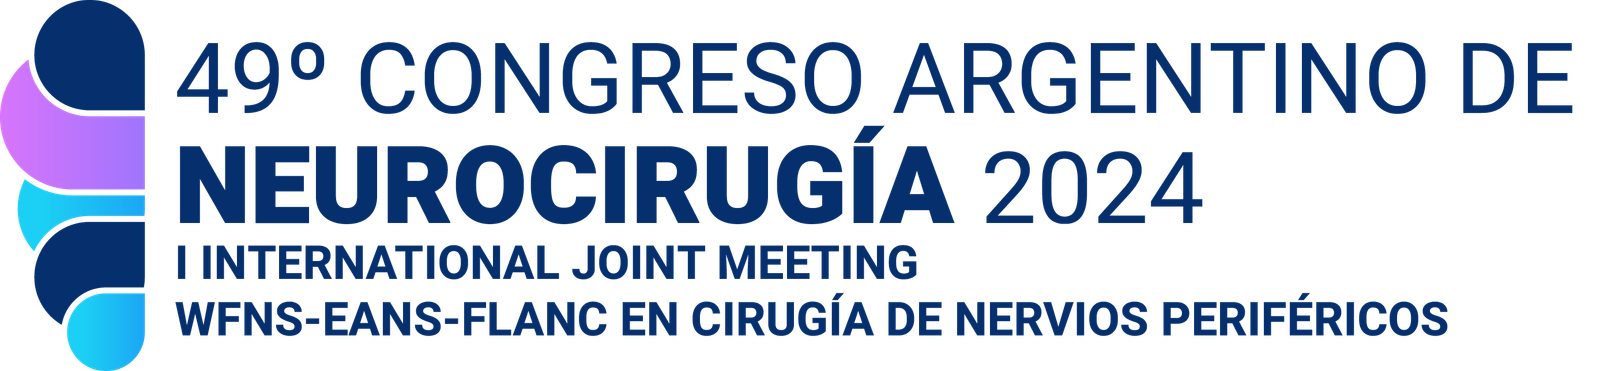 49º CONGRESO  ARGENTINO DE  NEUROCIRUGÍA  2024